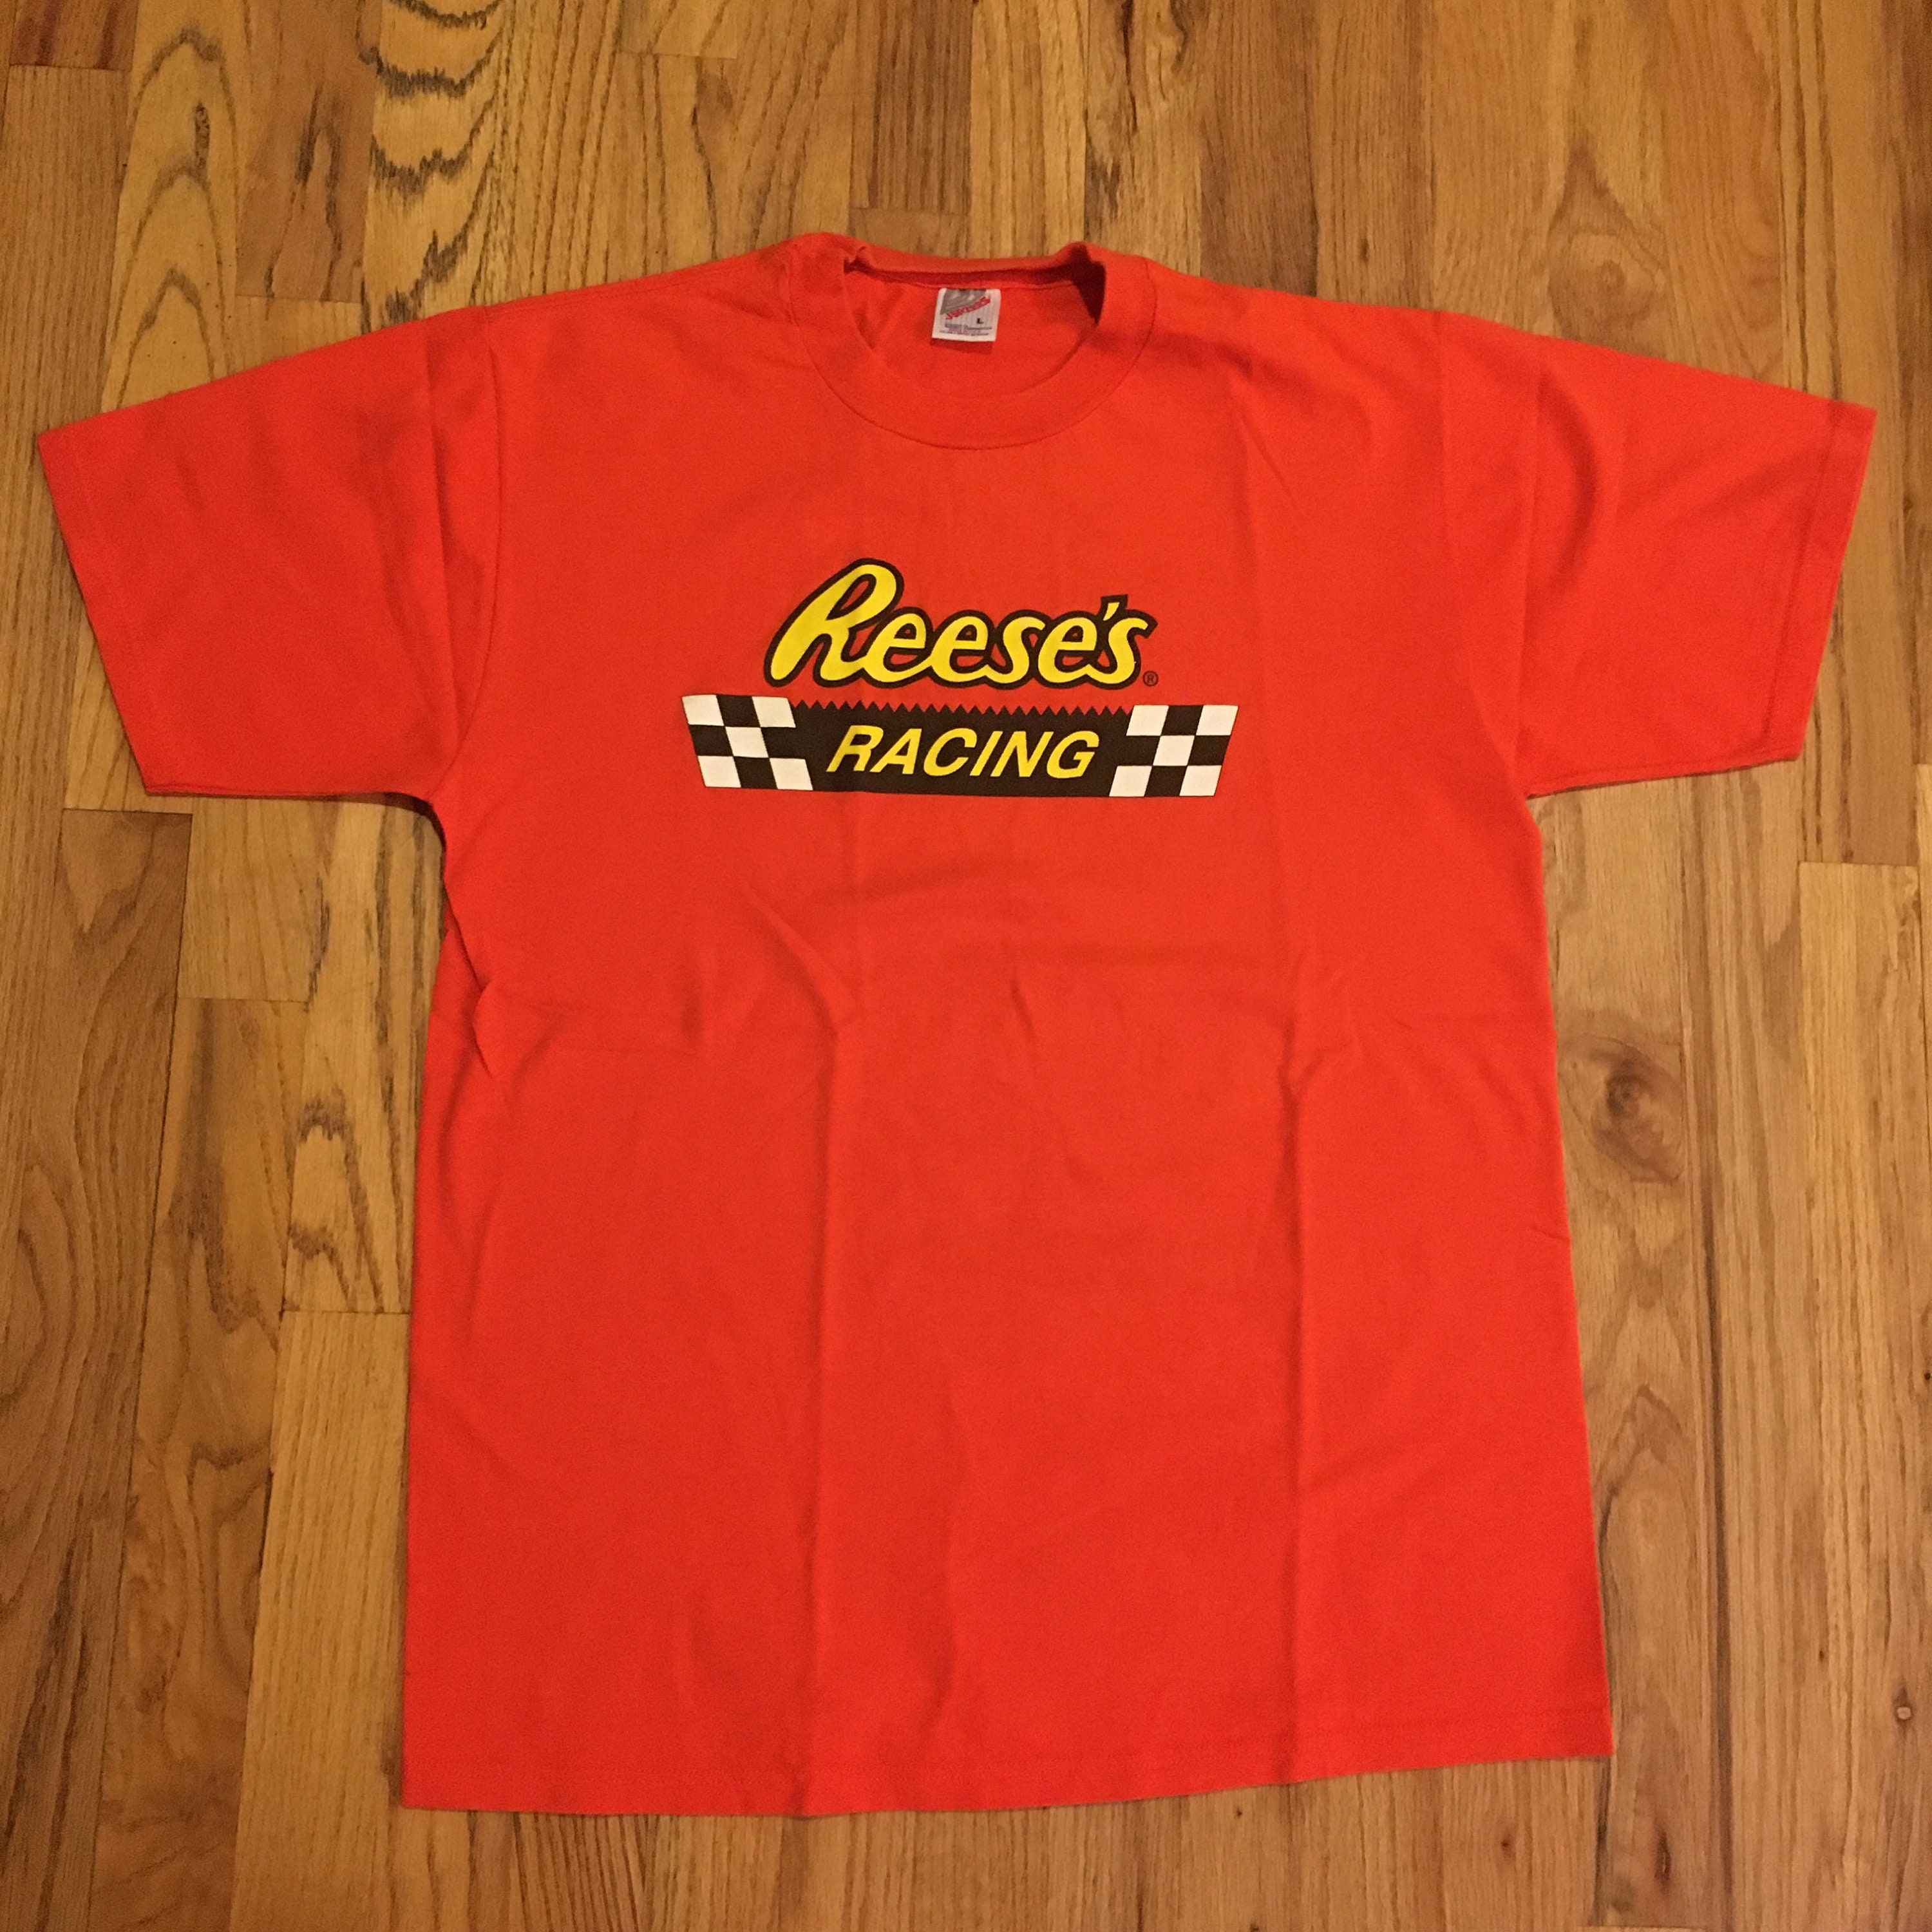 Vintage Reese's Racing Tee - NASCAR Racing - Made in USA!